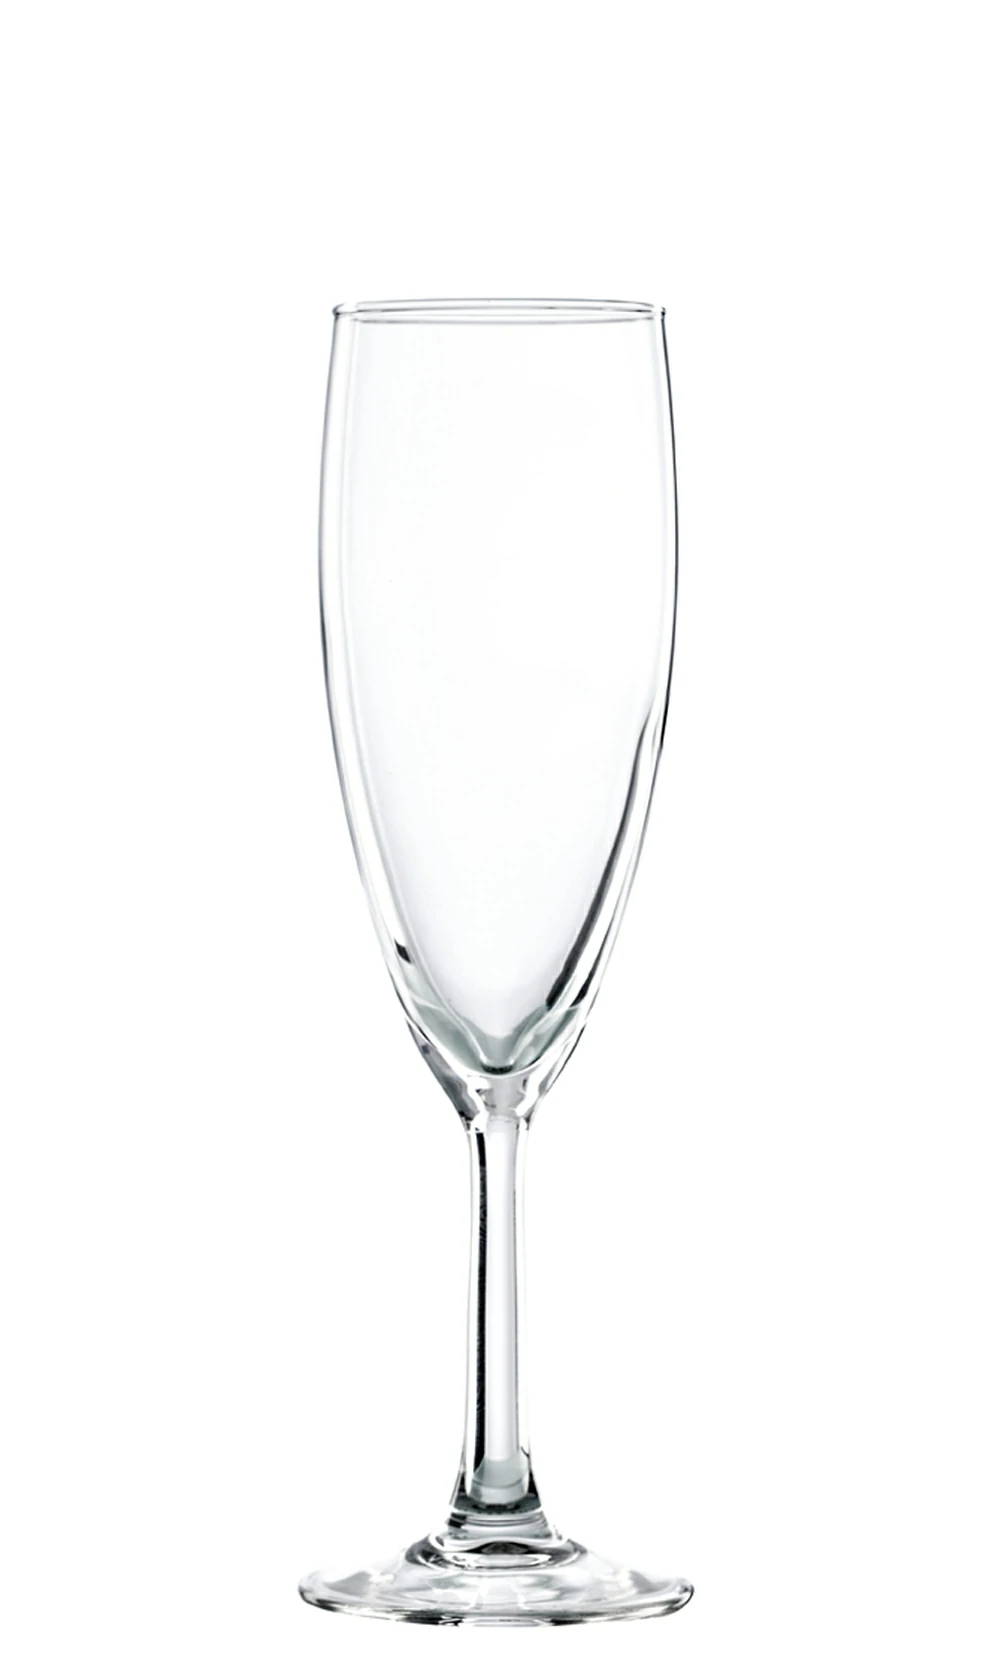 FT Merlot Champagne Flute 15cl/5.25oz